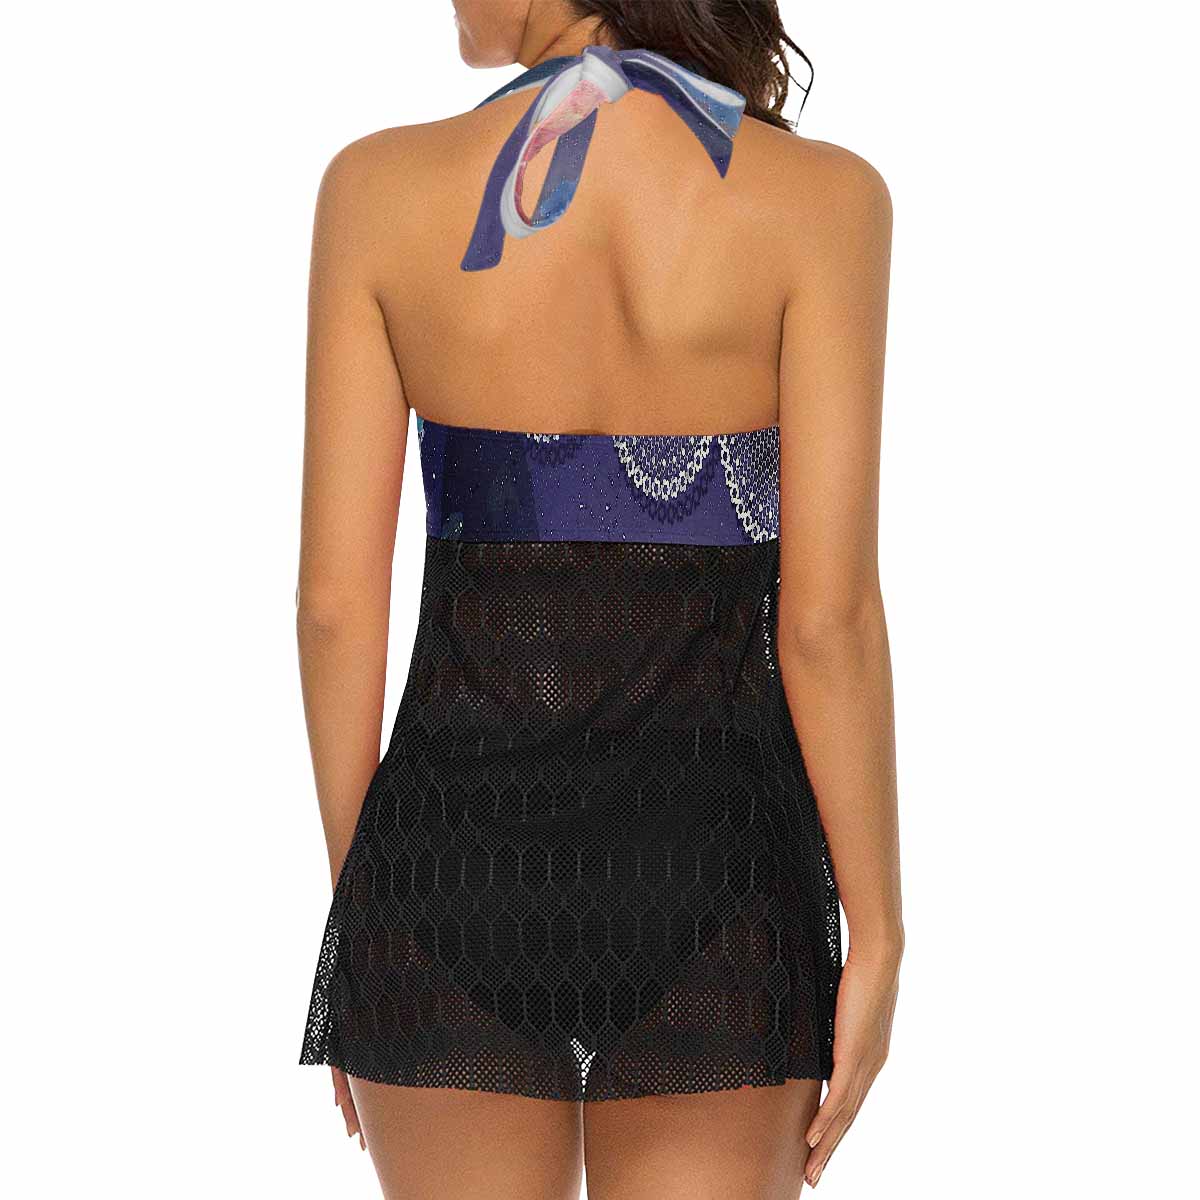 Bikini & cover up top swim wear, Printed Victorian lace design 02